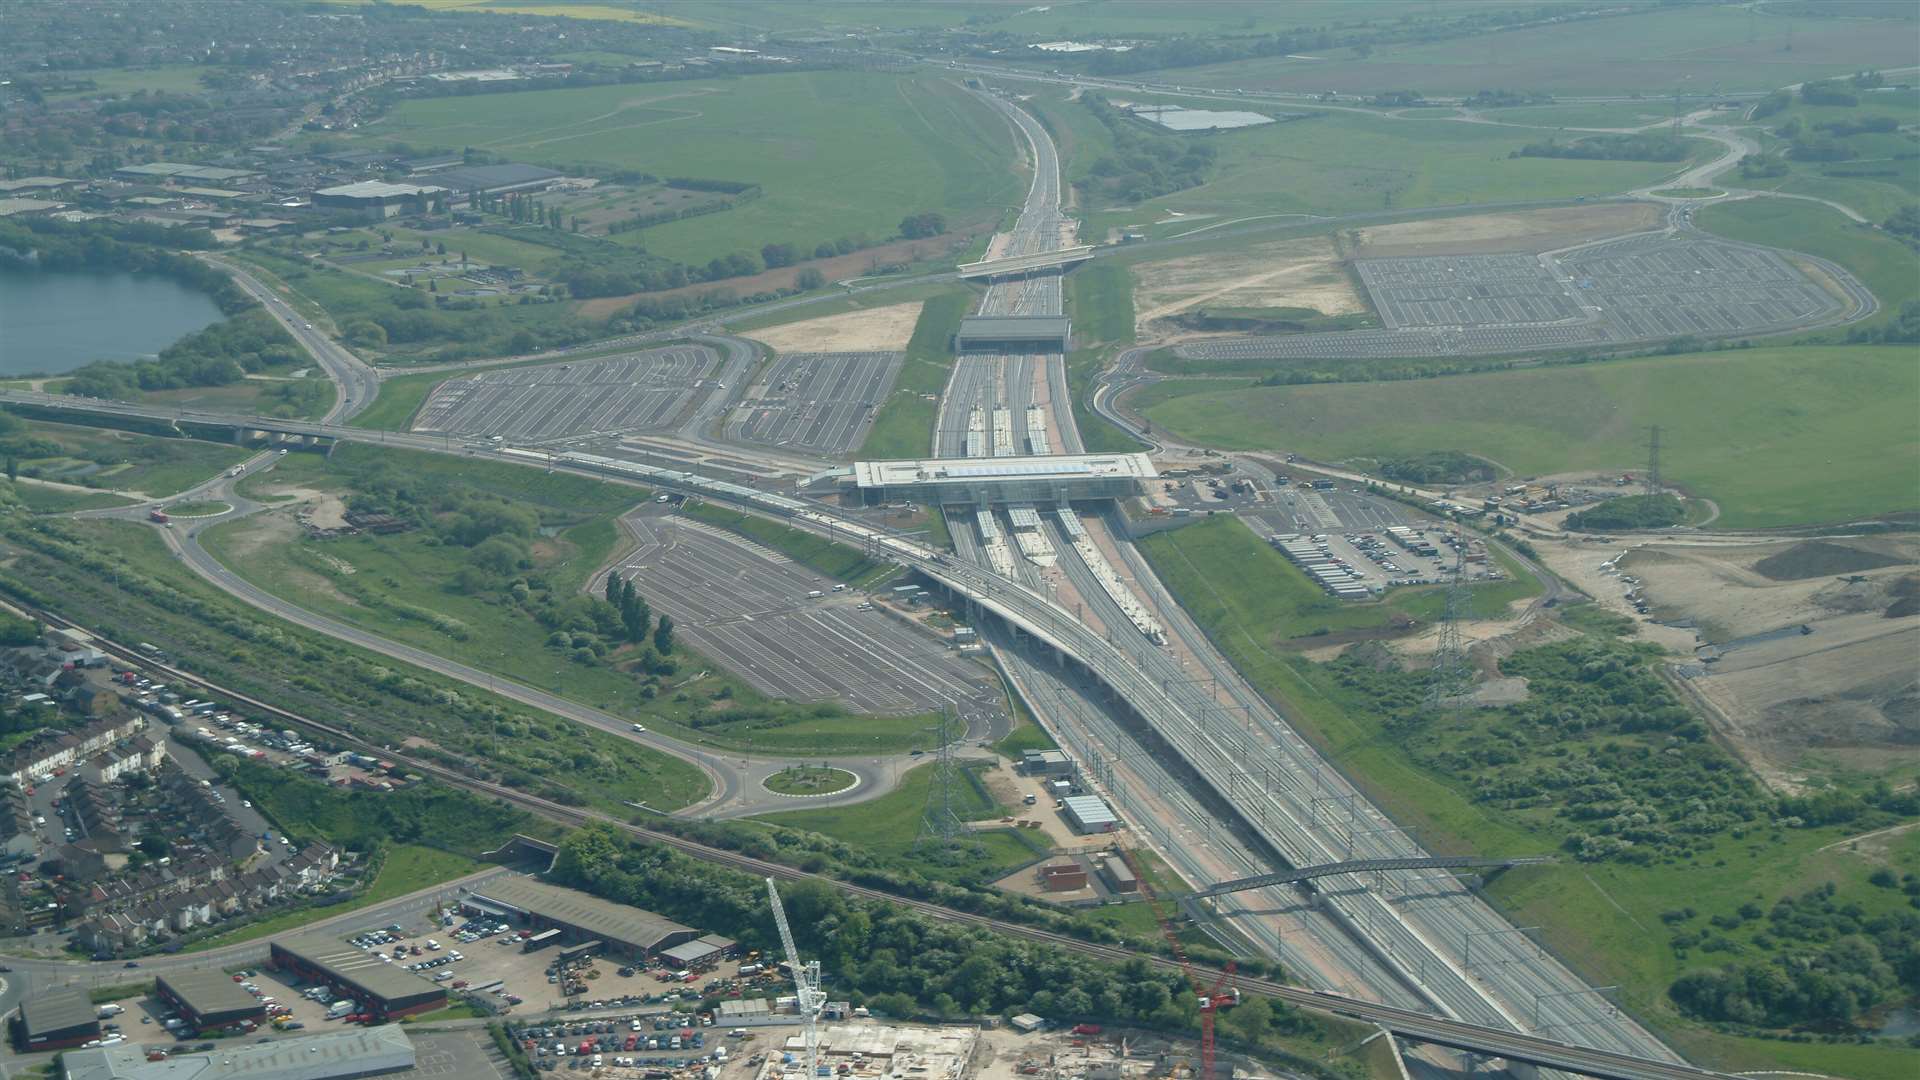 Ebbsfleet International station as viewed from above